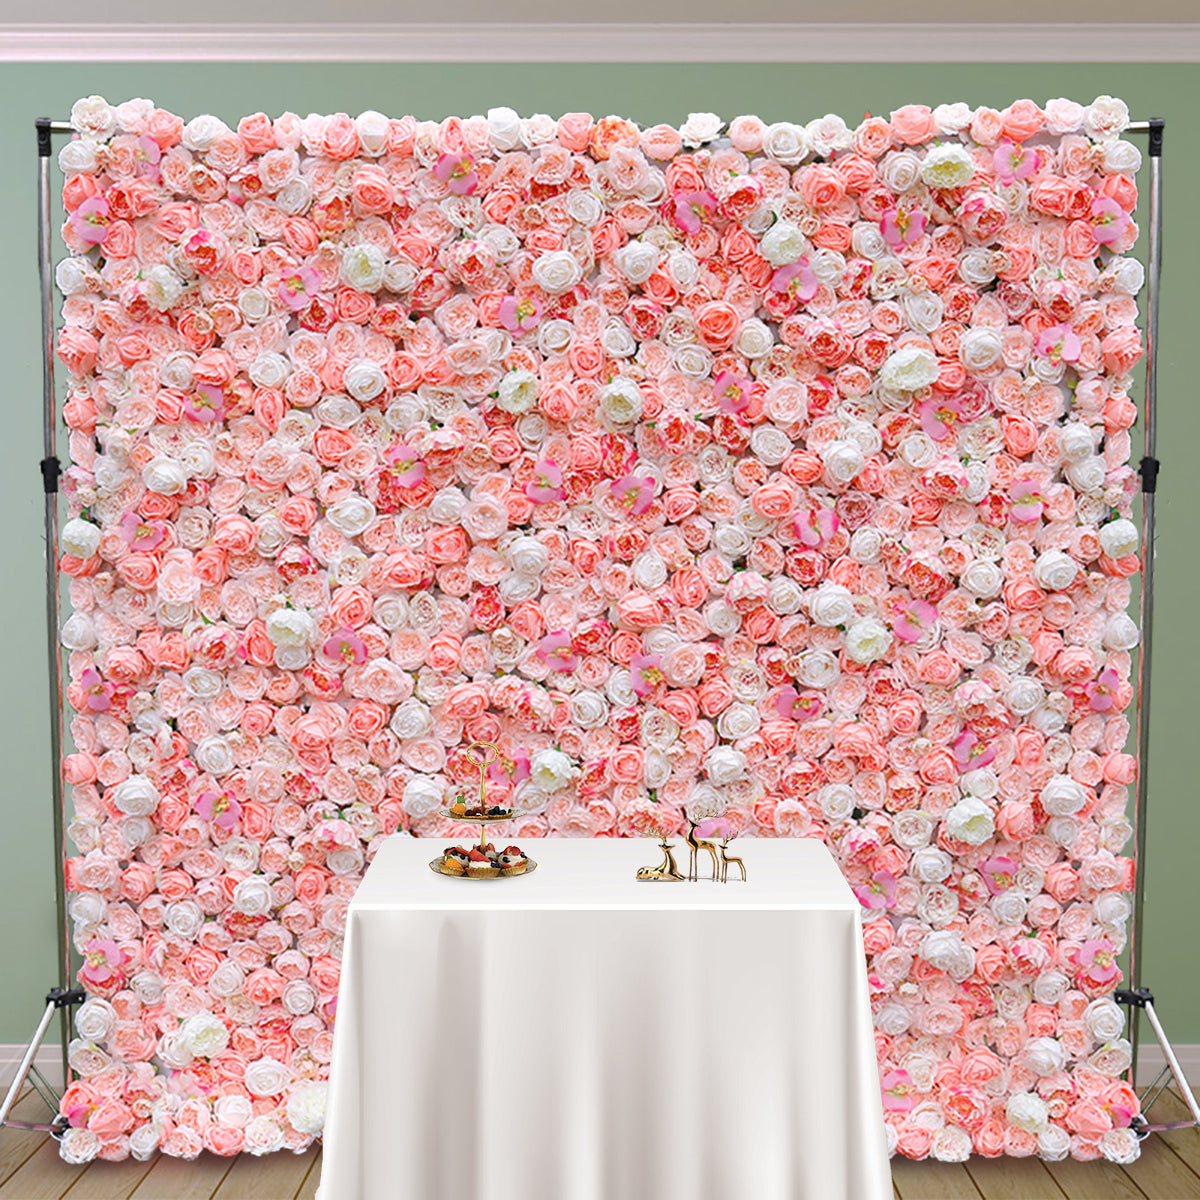 5D Artificial Flower Wall Arrangement Wedding Party Birthday Backdrop Decor HQ9004